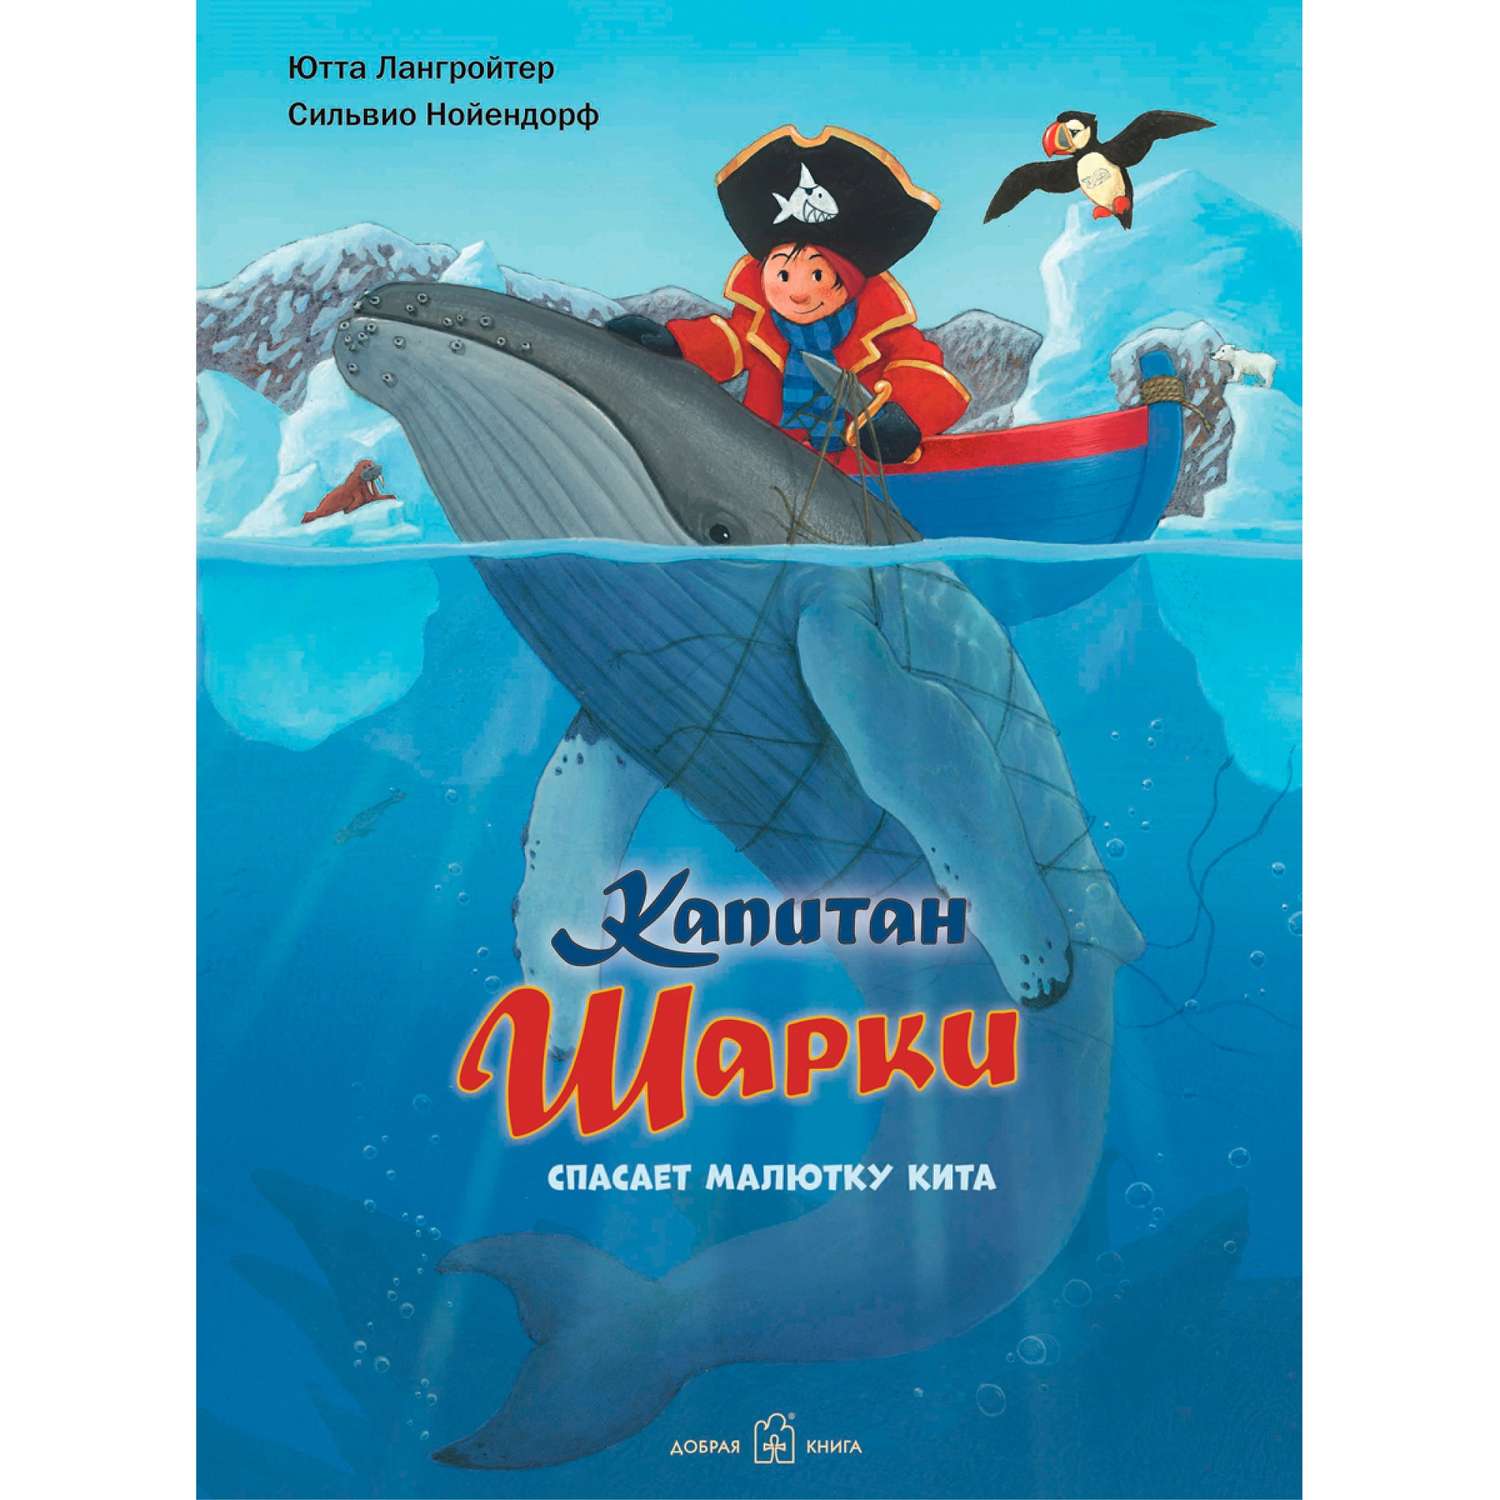 Книга Добрая книга Капитан Шарки спасает малютку кита. Иллюстрации Сильвио Нойендорфа - фото 1